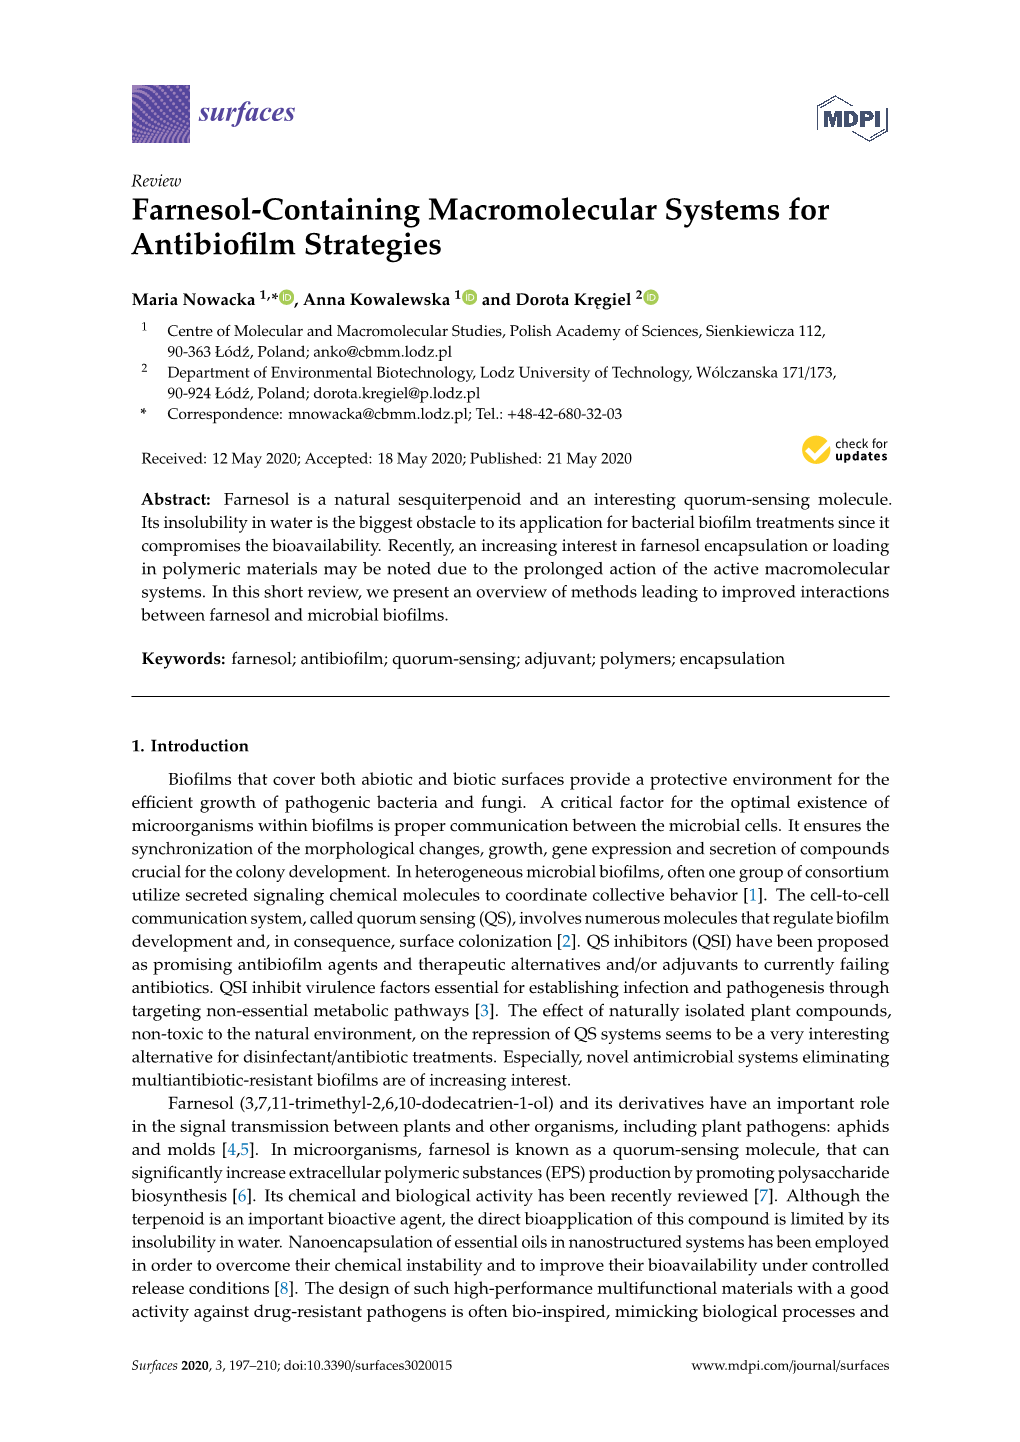 Farnesol-Containing Macromolecular Systems for Antibiofilm Strategies